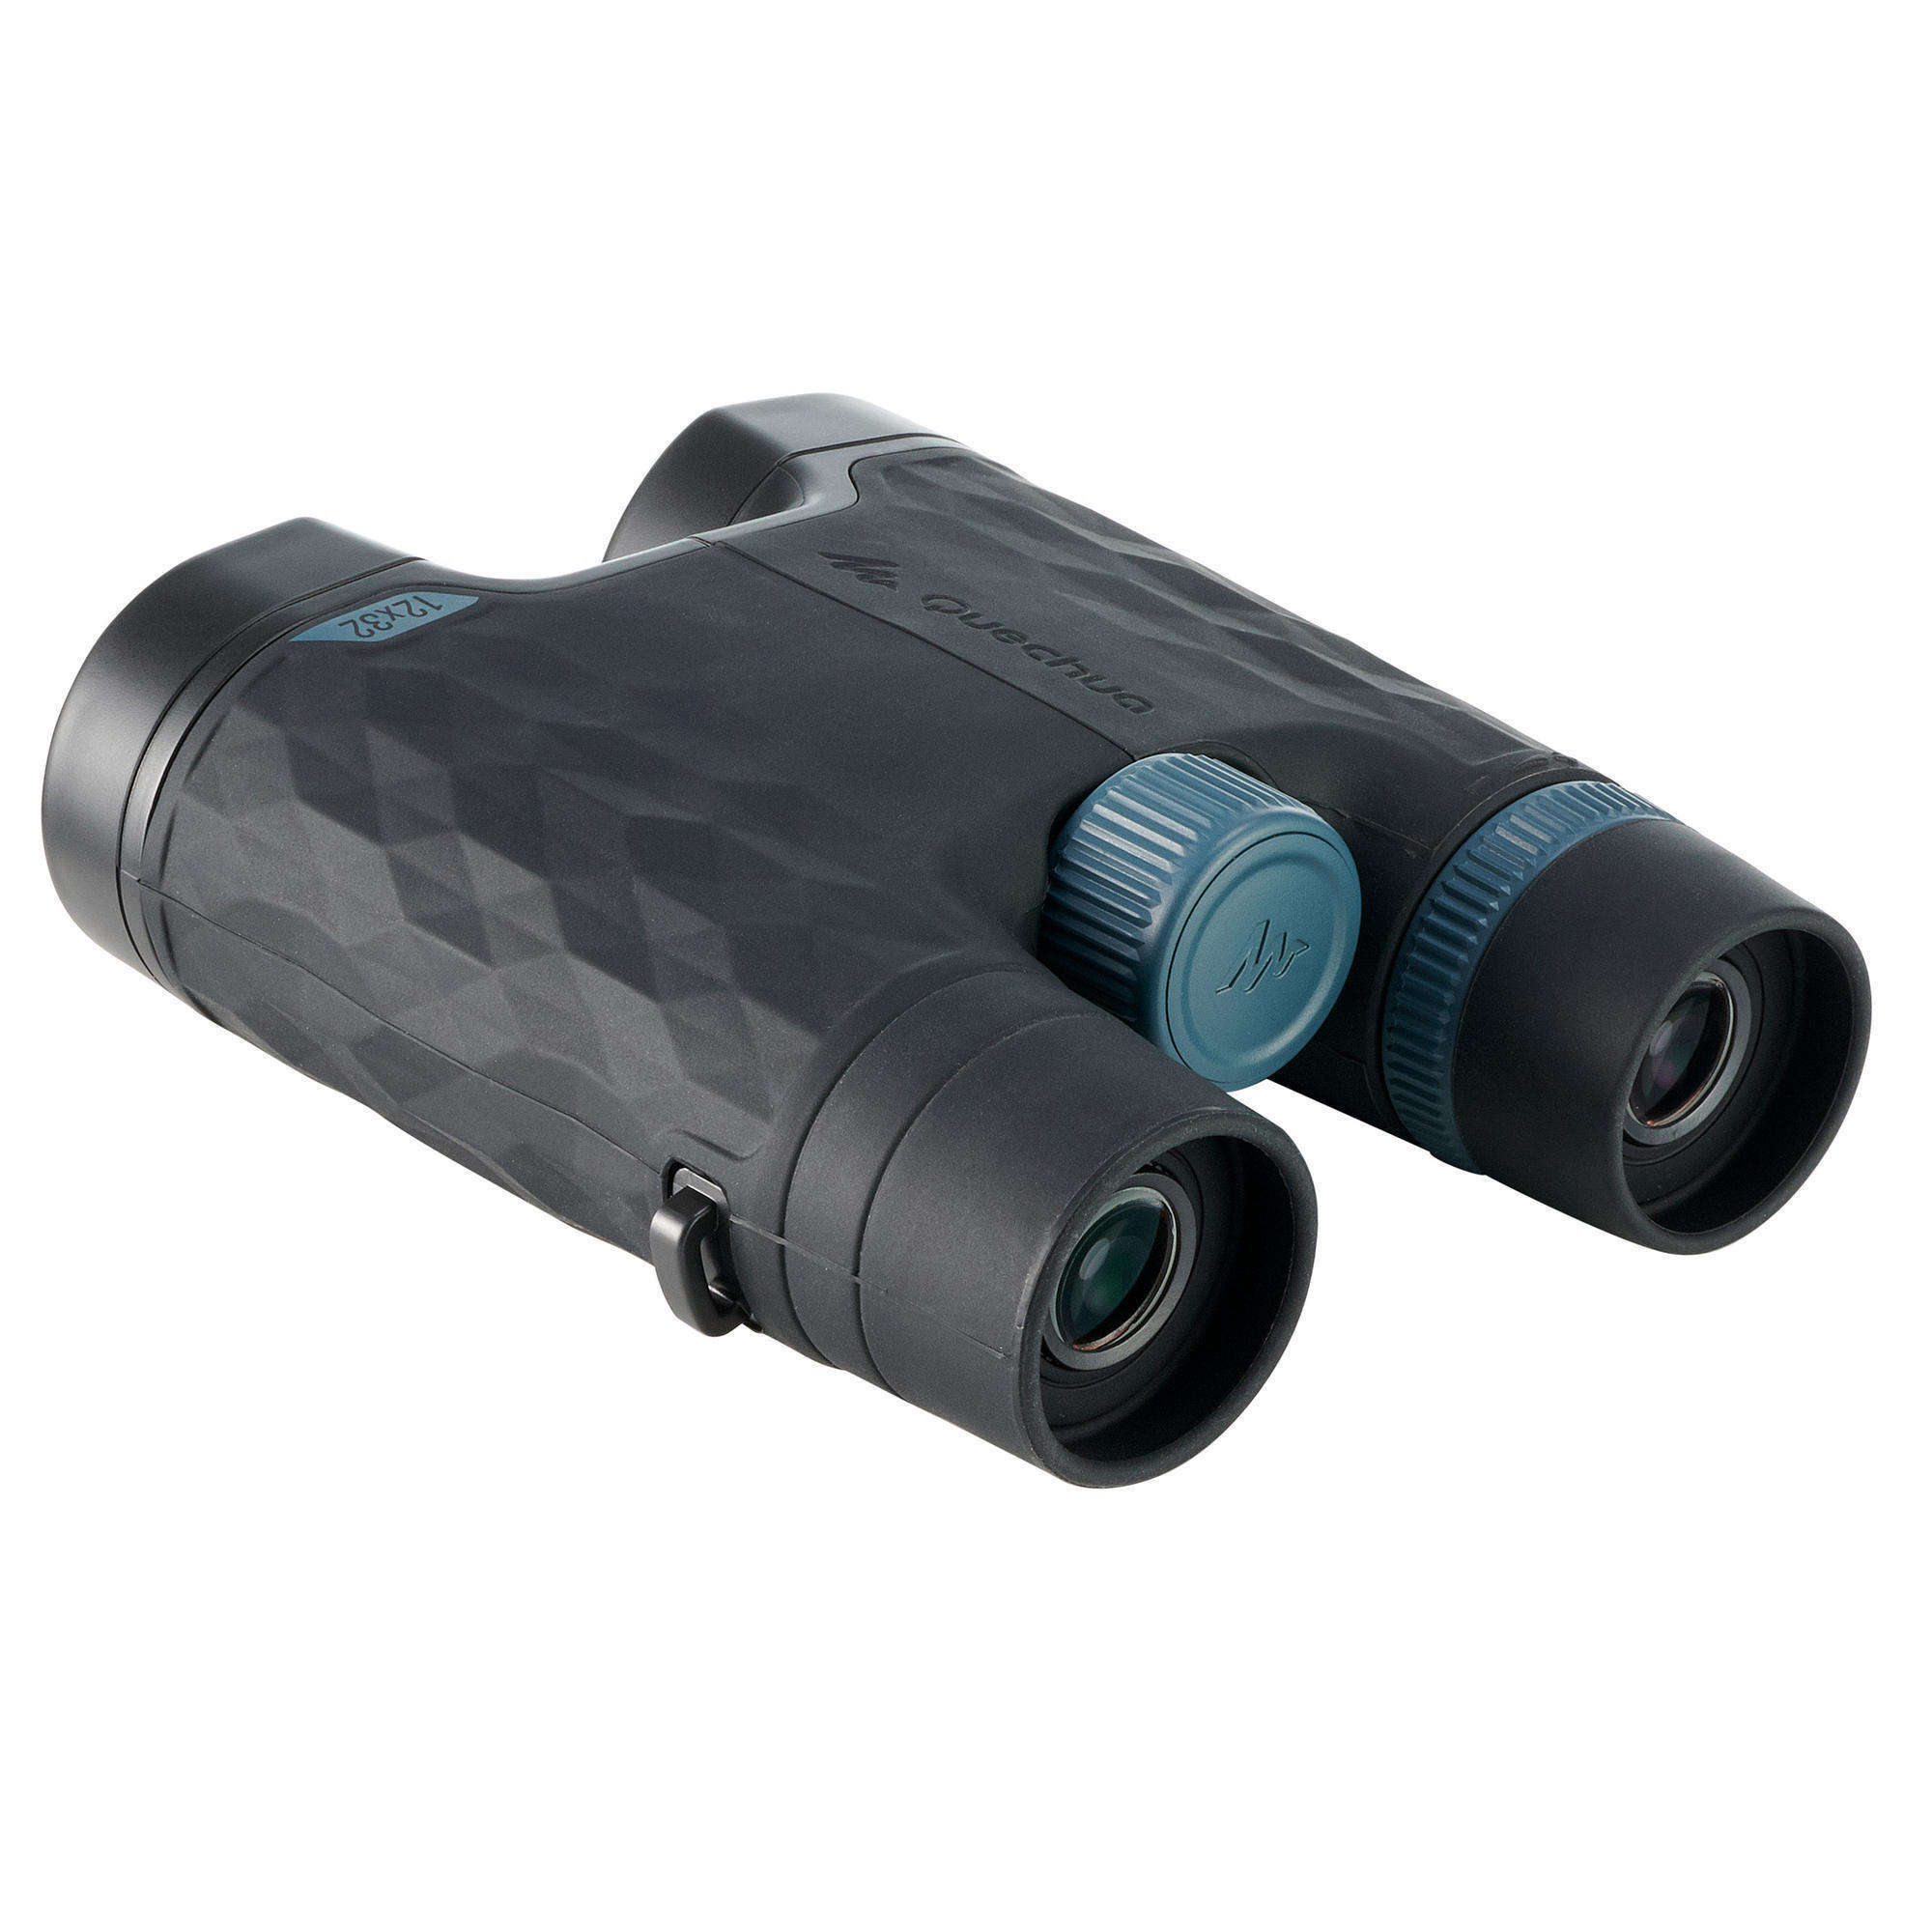 Adult Hiking binoculars with adjustment - MH B560 - x12 magnification - Black 2/10